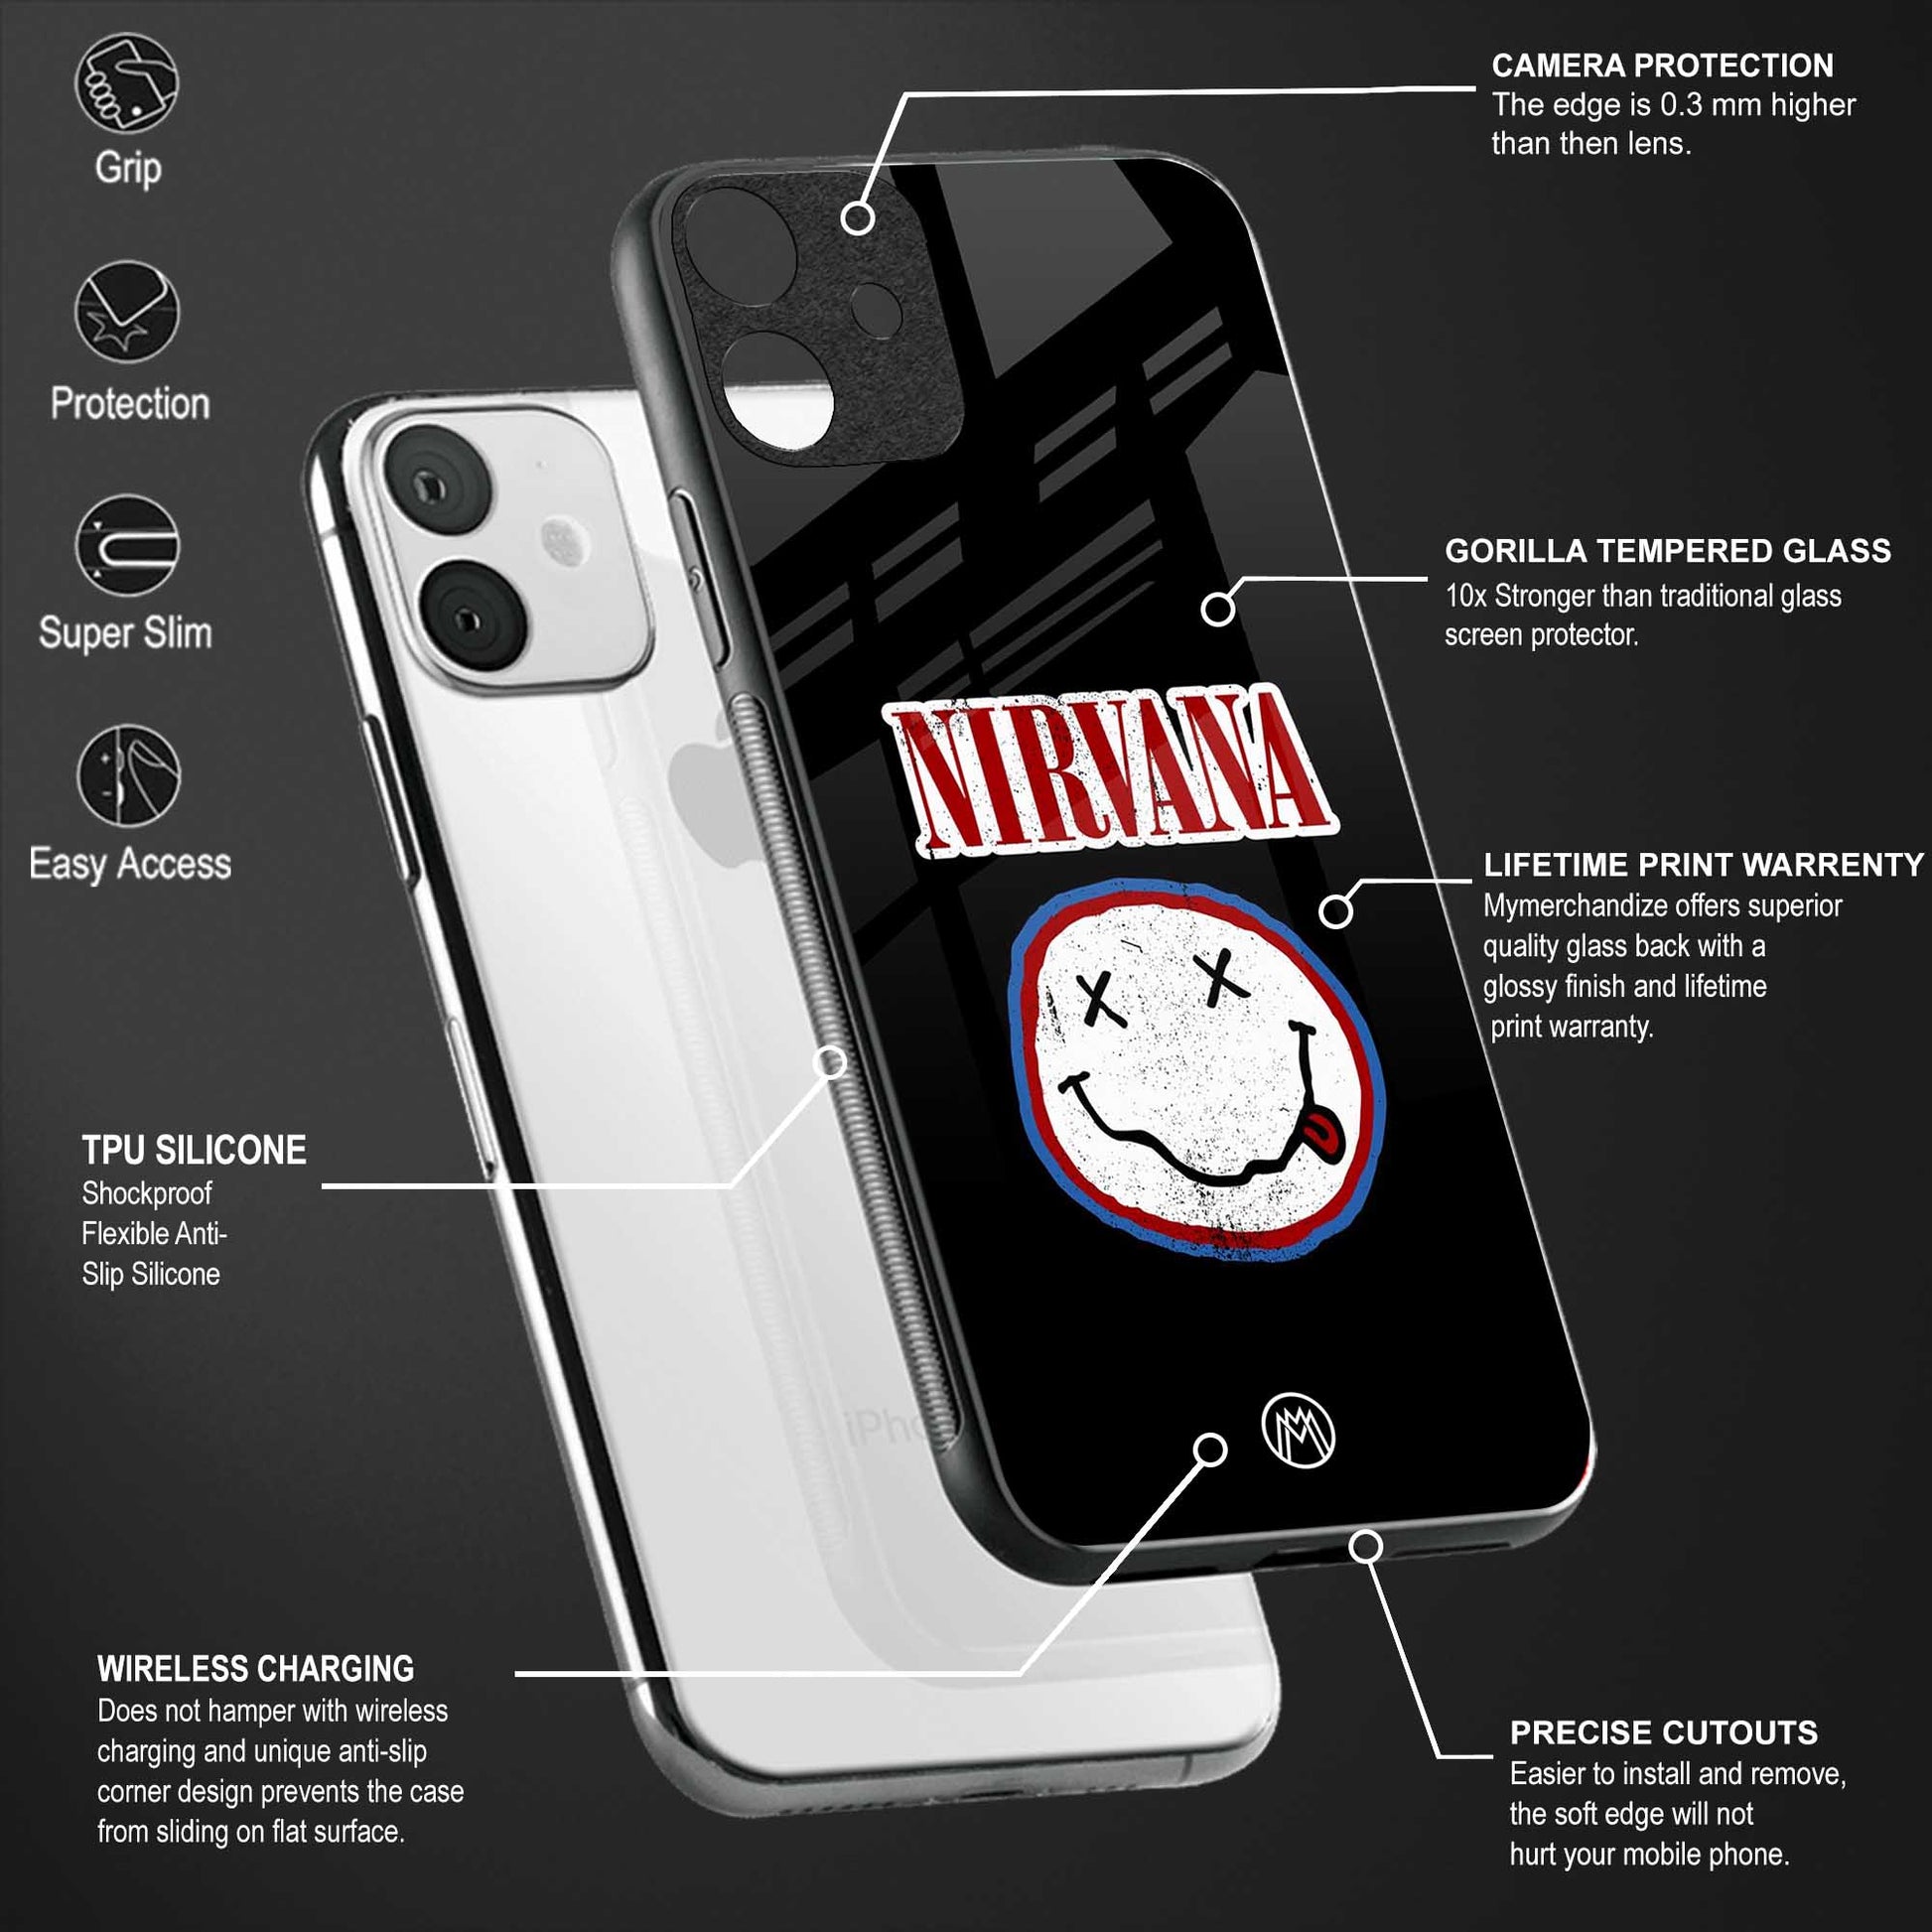 nirvana back phone cover | glass case for vivo y22